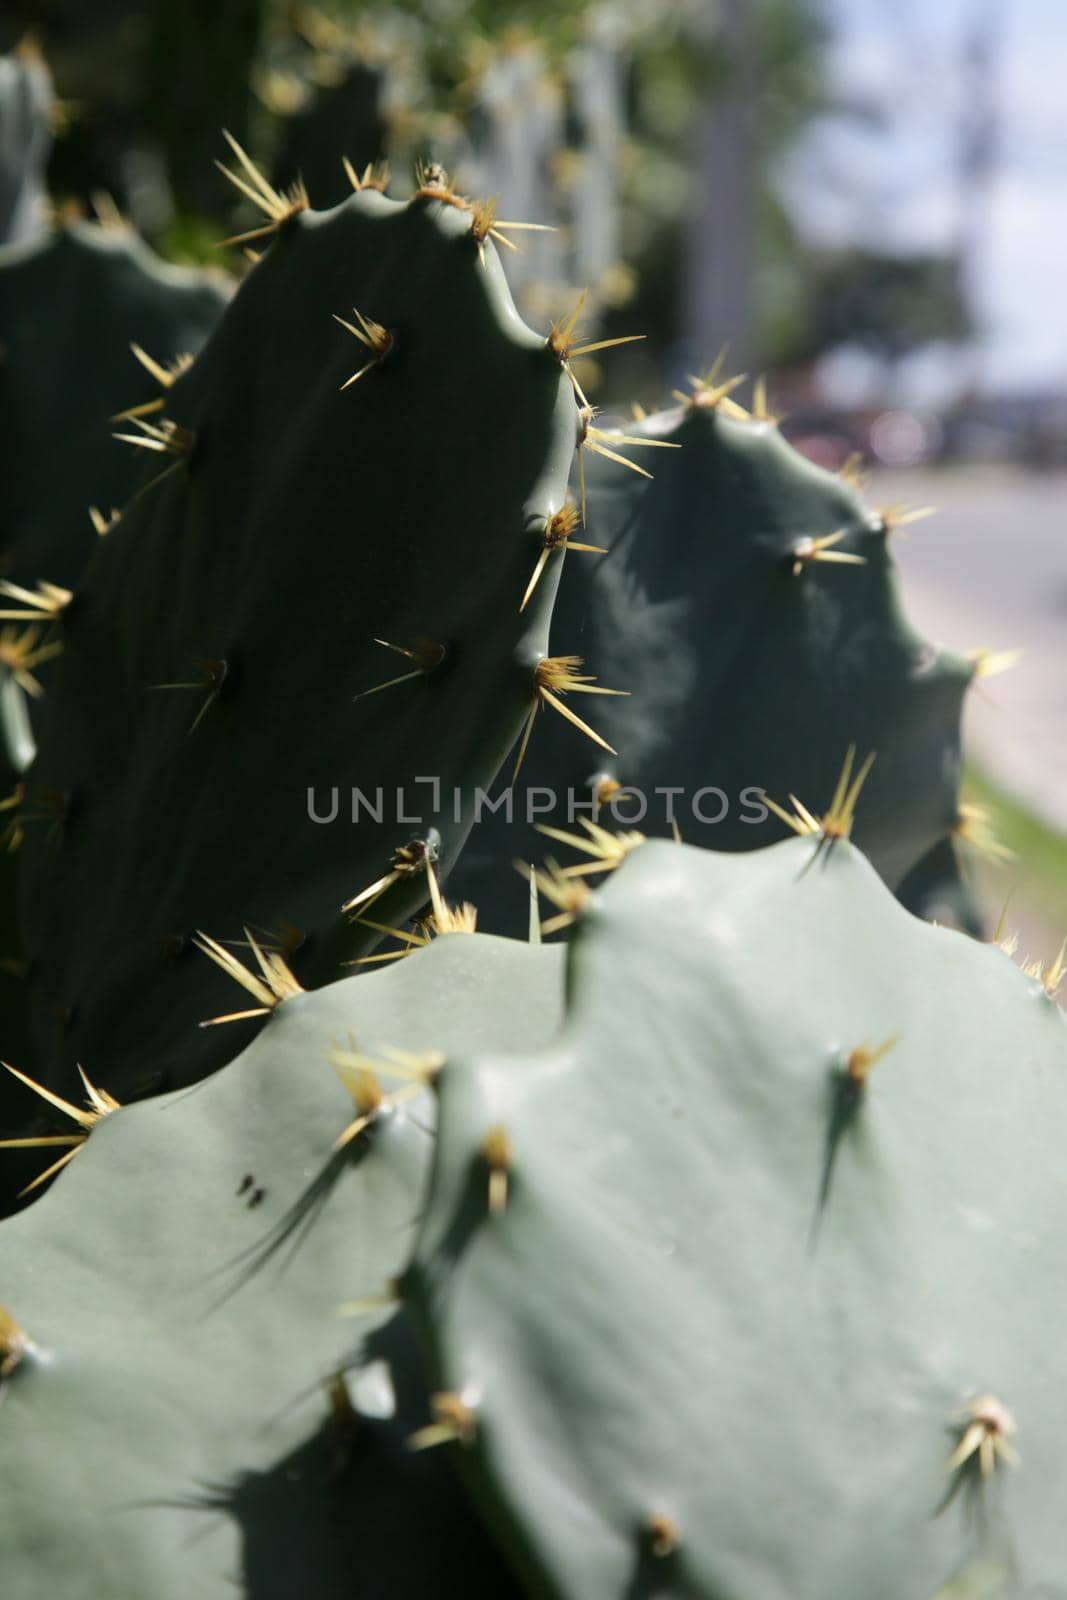 cactus thorns by joasouza